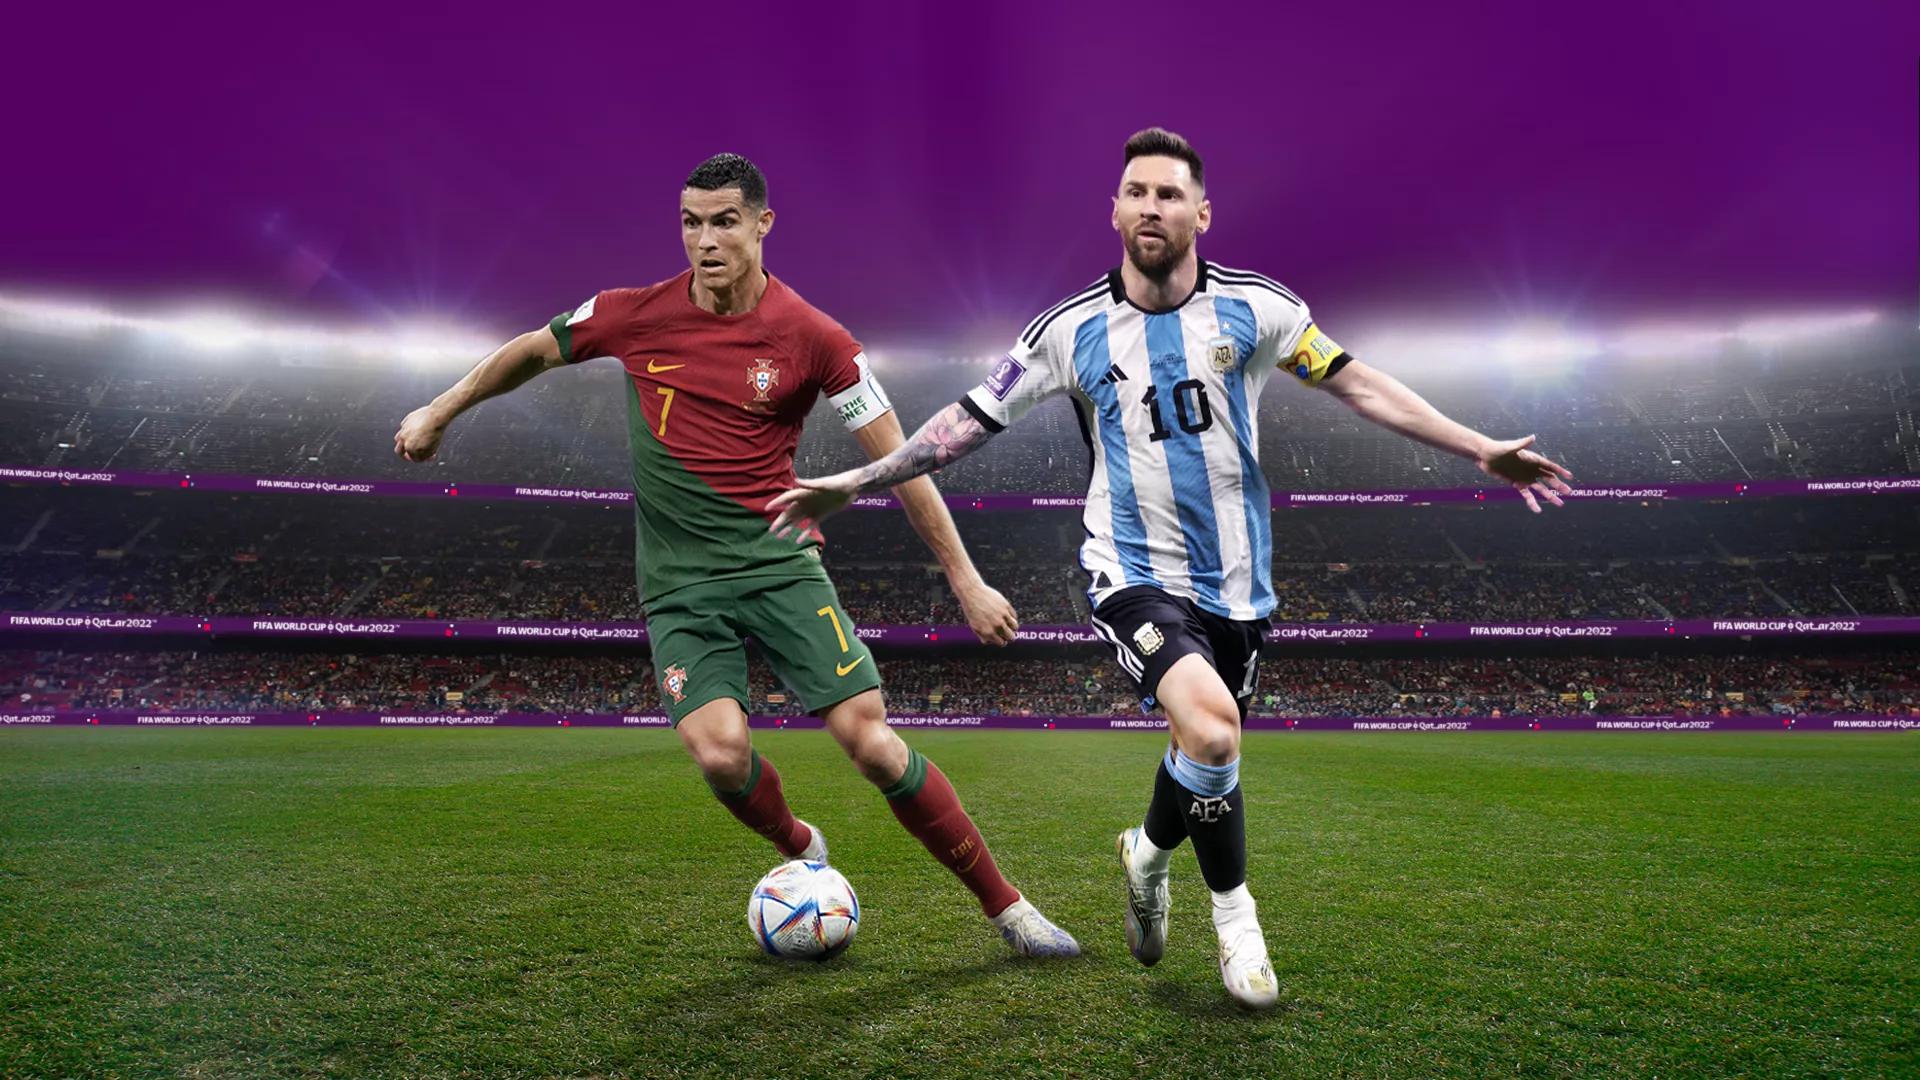 Could a Messi v Ronaldo final really happen?